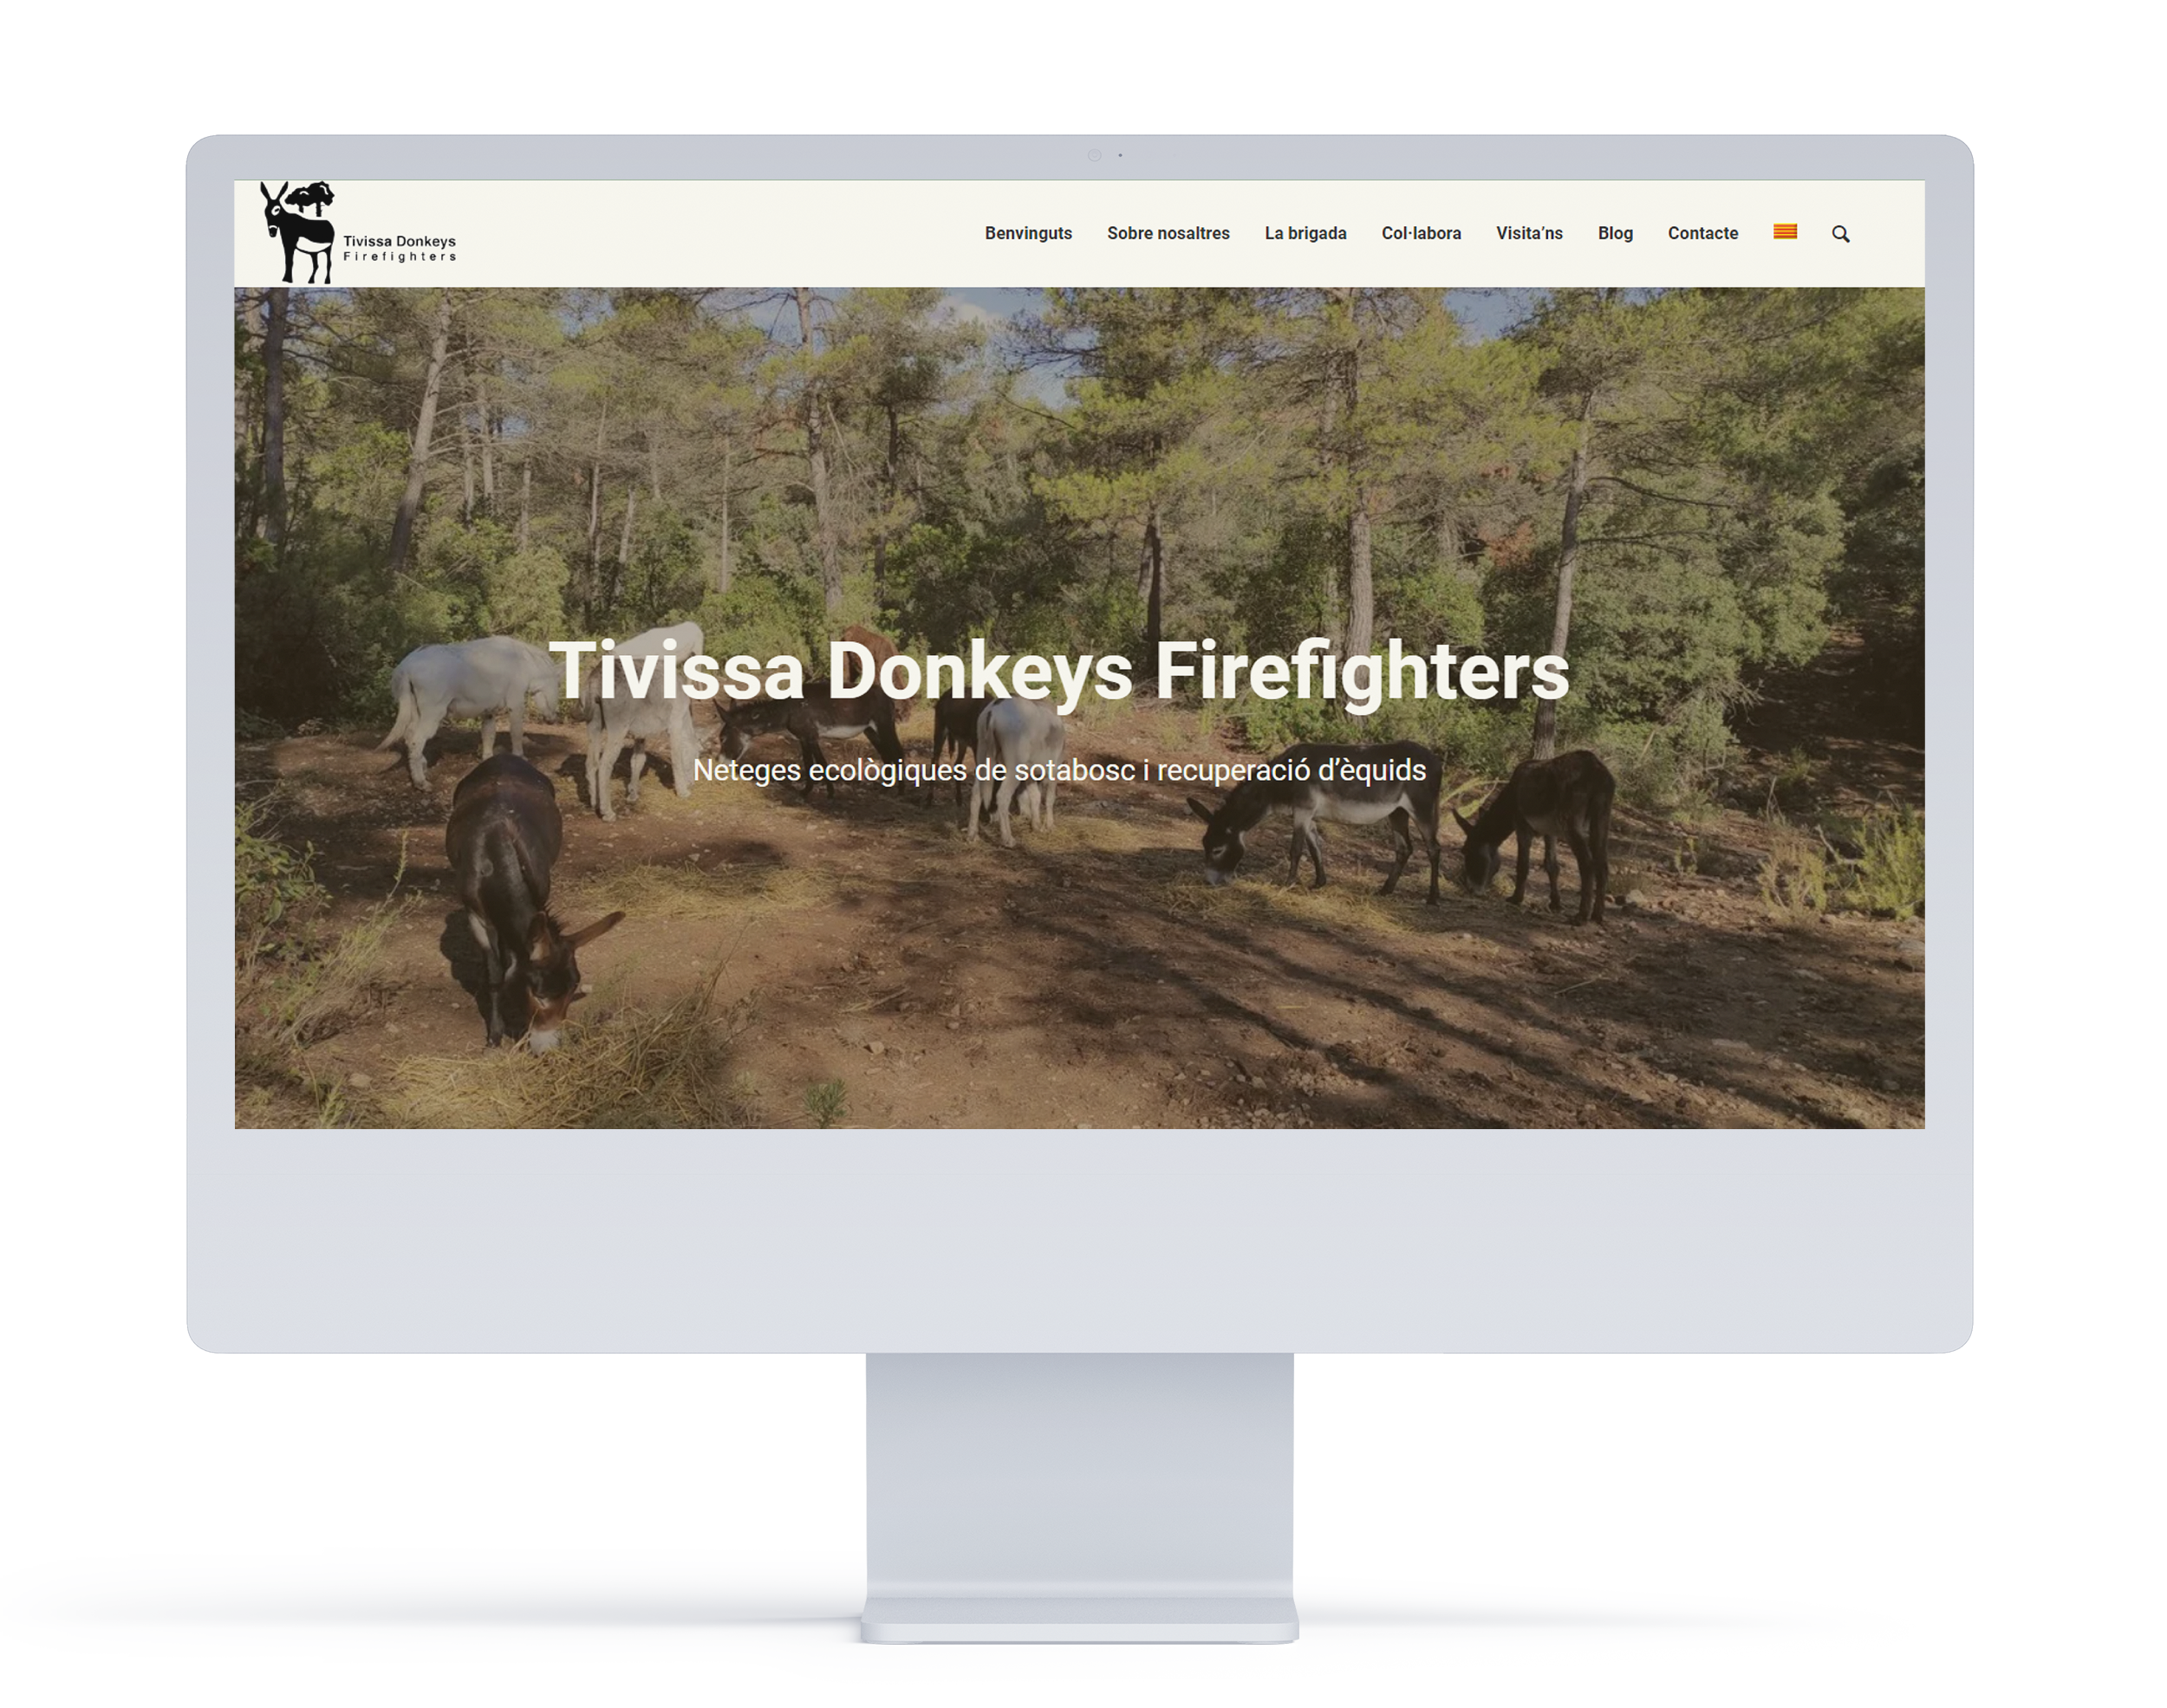 allucinant studio projects - tivissa donkeys firefighters website mockup